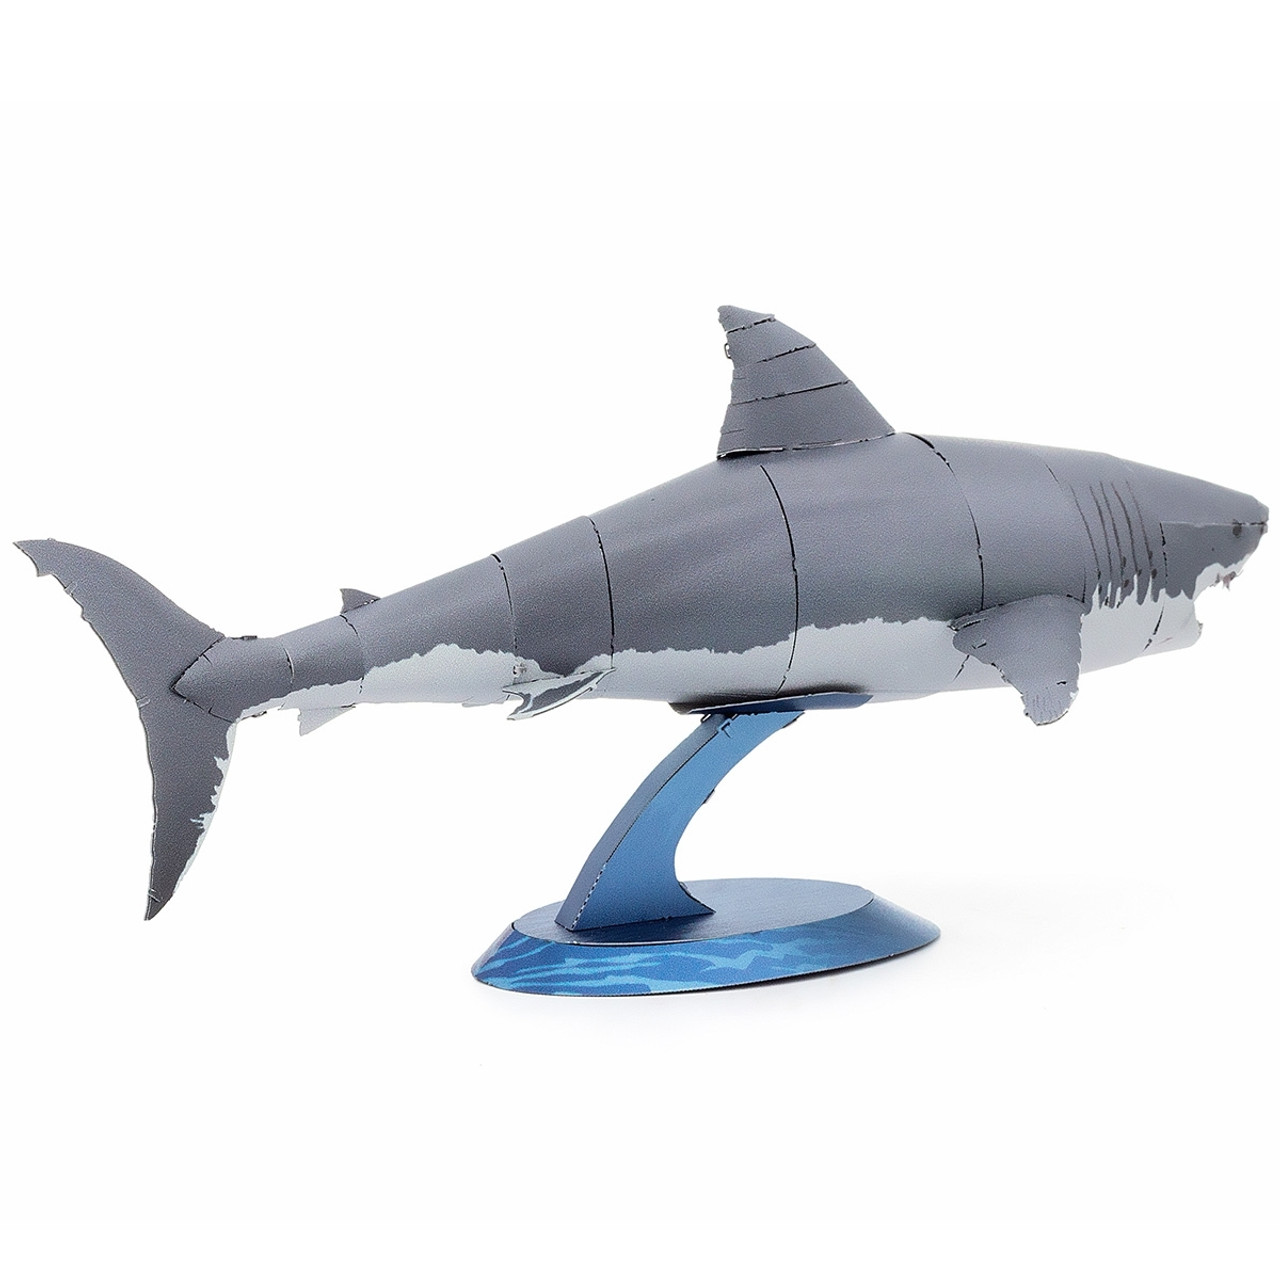 Metal Earth Great White Shark